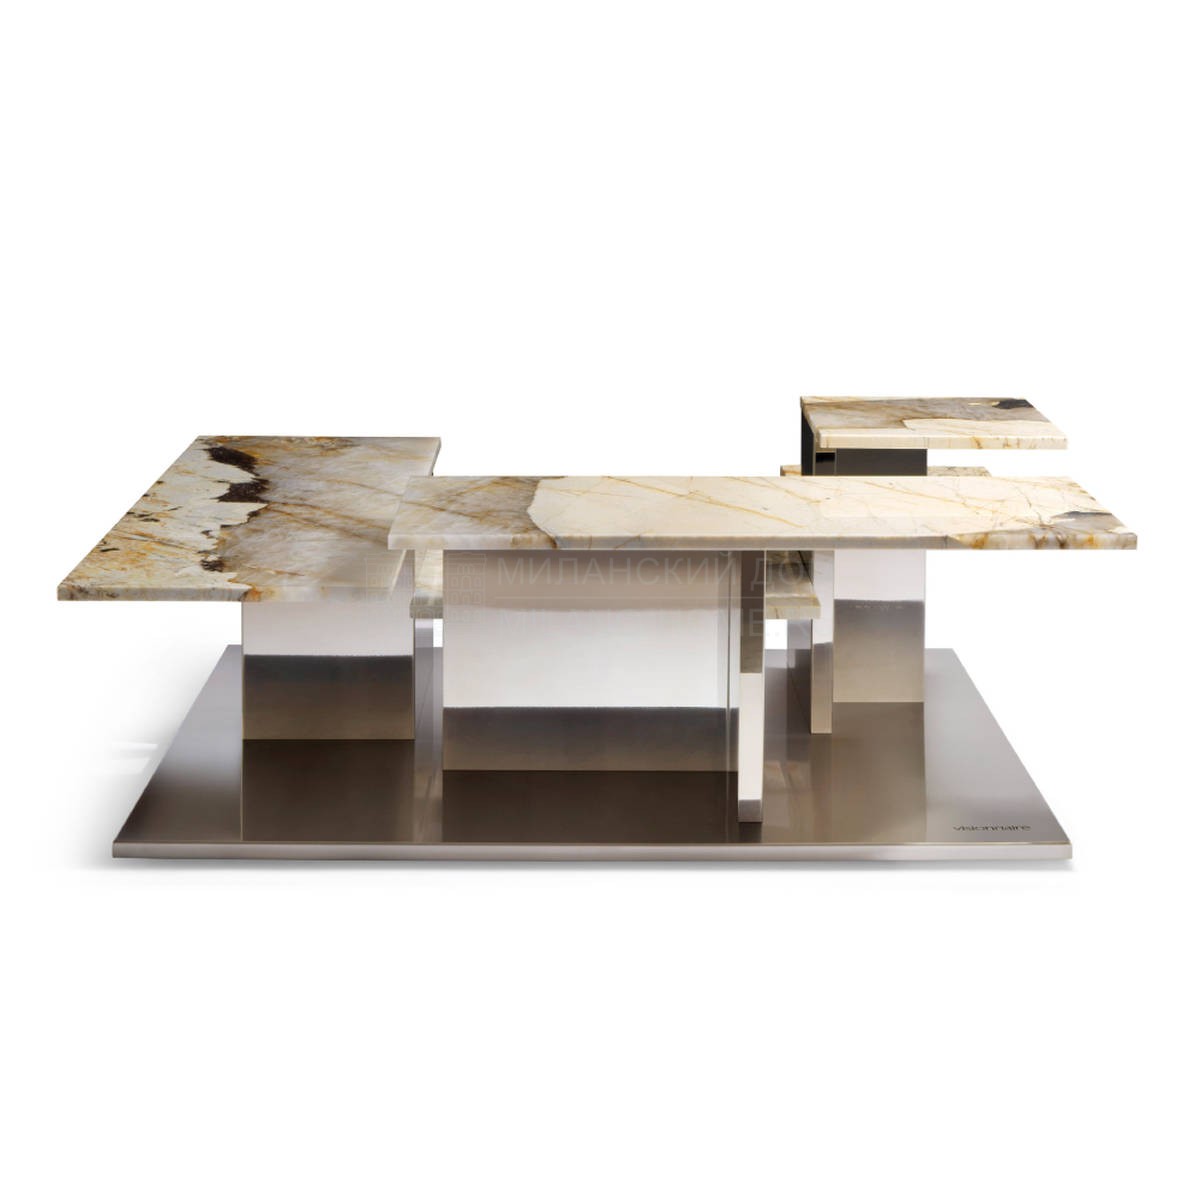 Кофейный столик Building table из Италии фабрики IPE CAVALLI VISIONNAIRE